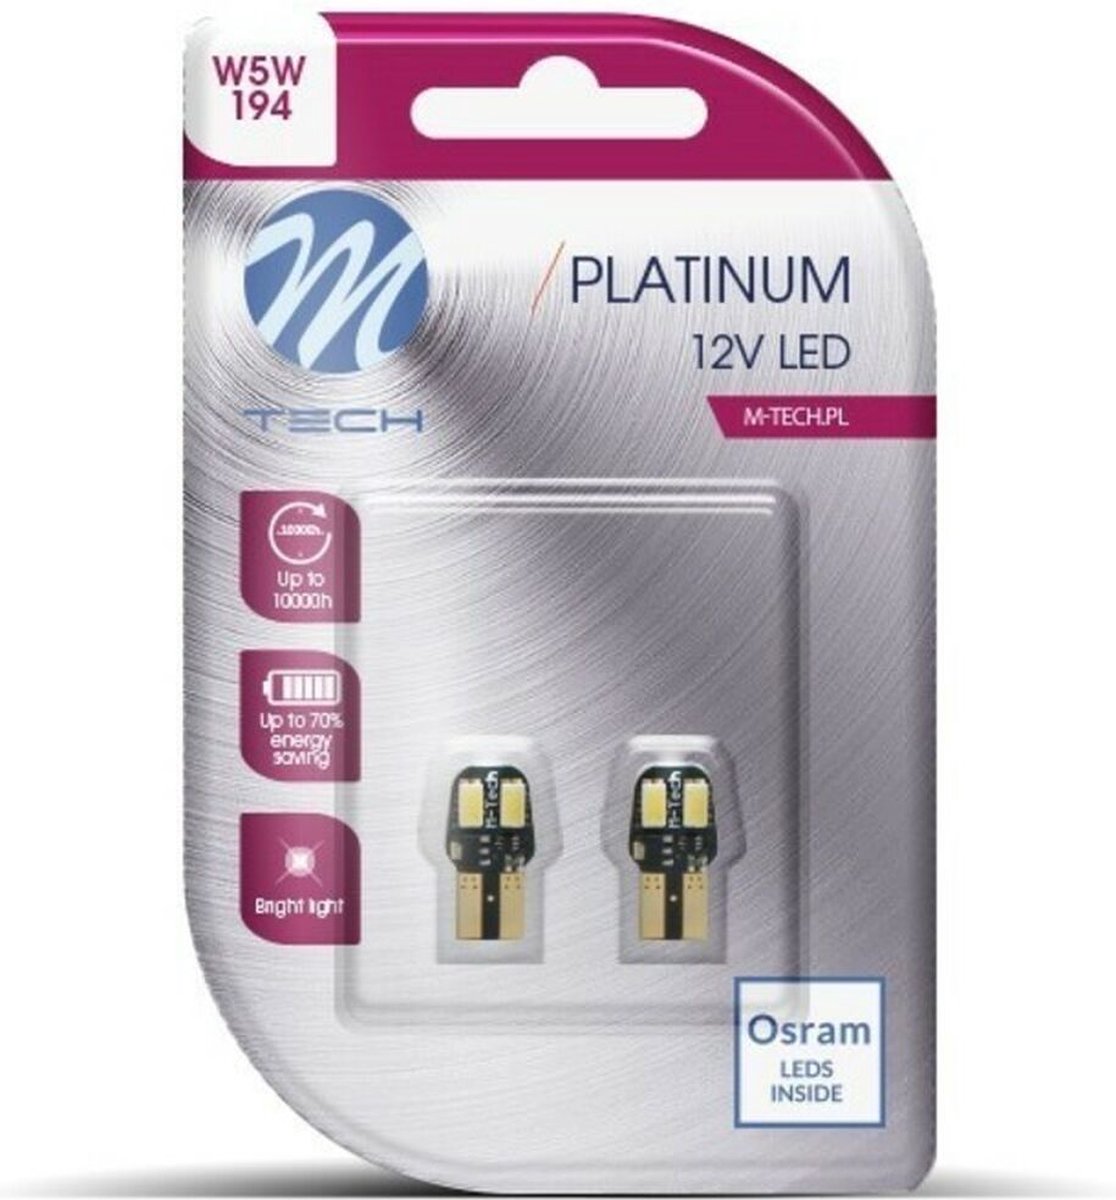 M-Tech LED W5W 12V 2W - Platinum - Canbus - 4x Osram Led diode - Wit - Set